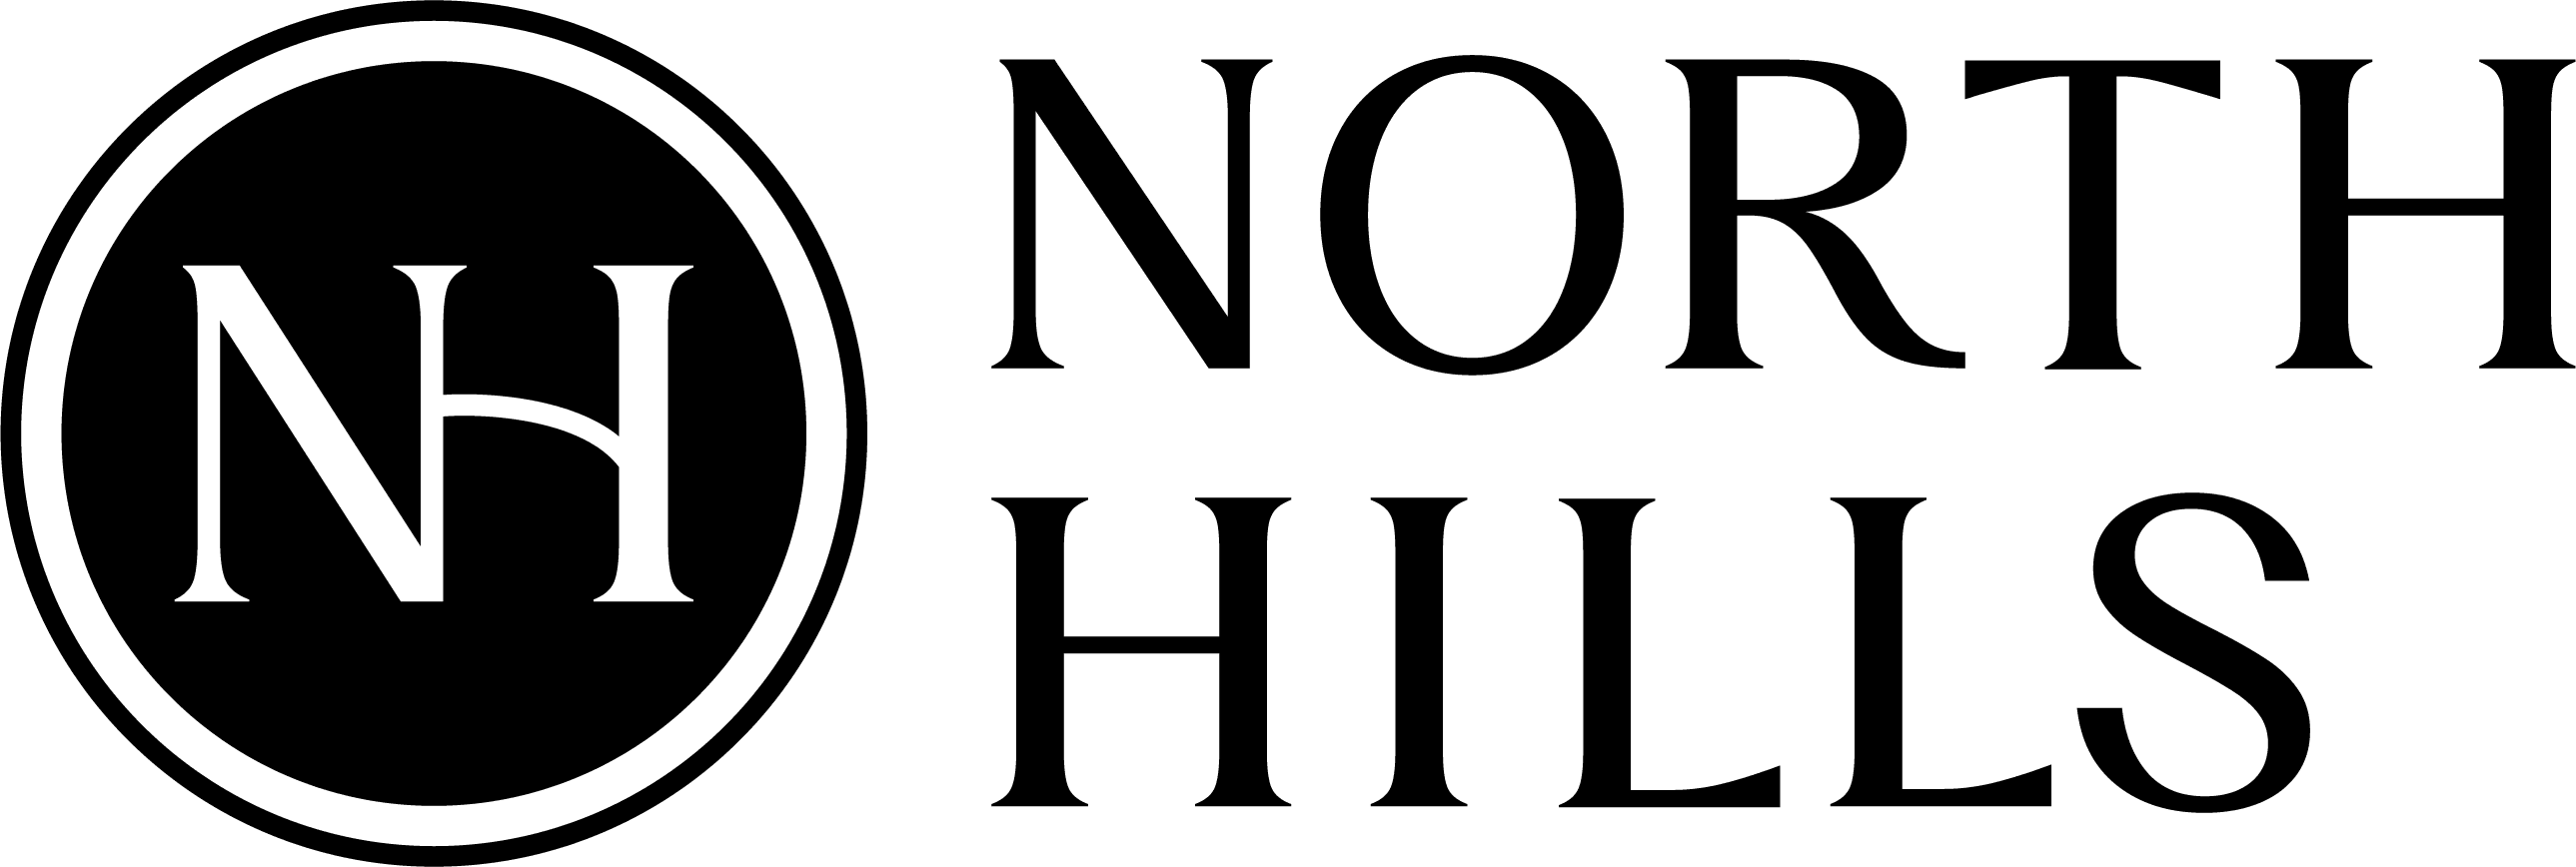 North Hills Secondary Logo Black